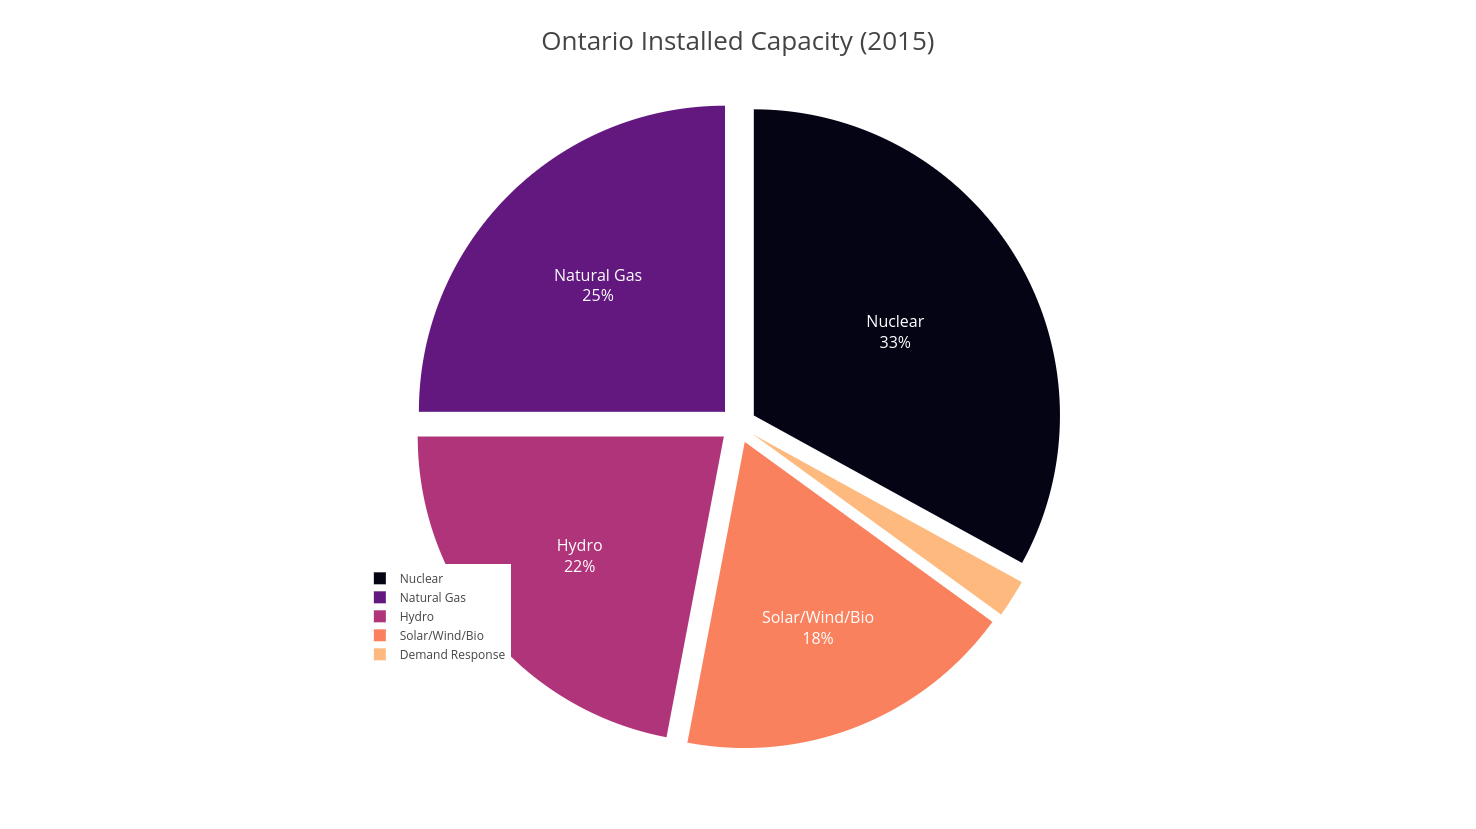 Installed generation capacity in Ontario (2015)